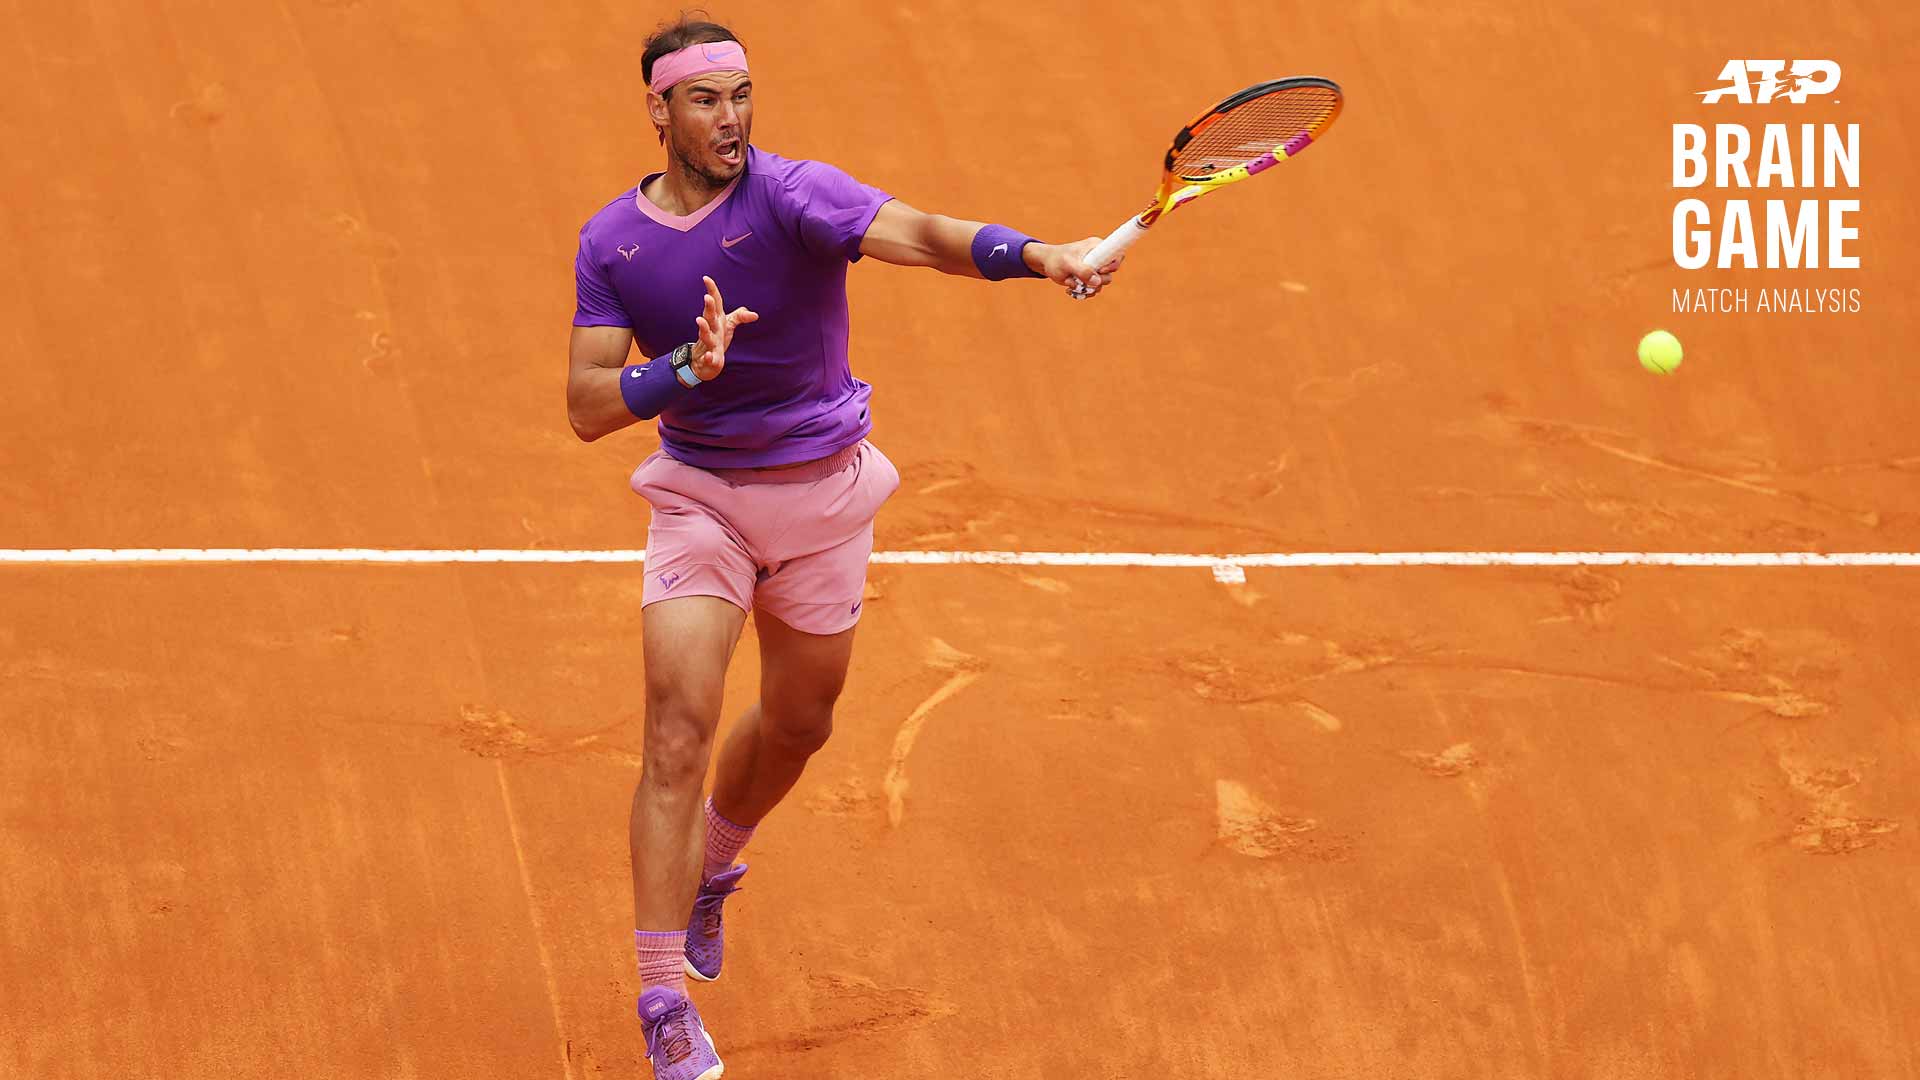 Inútil crecer Marte Brain Game | El Plan De Rafael Nadal: Atacar Pronto, Ganar Roma | ATP Tour  | Tenis